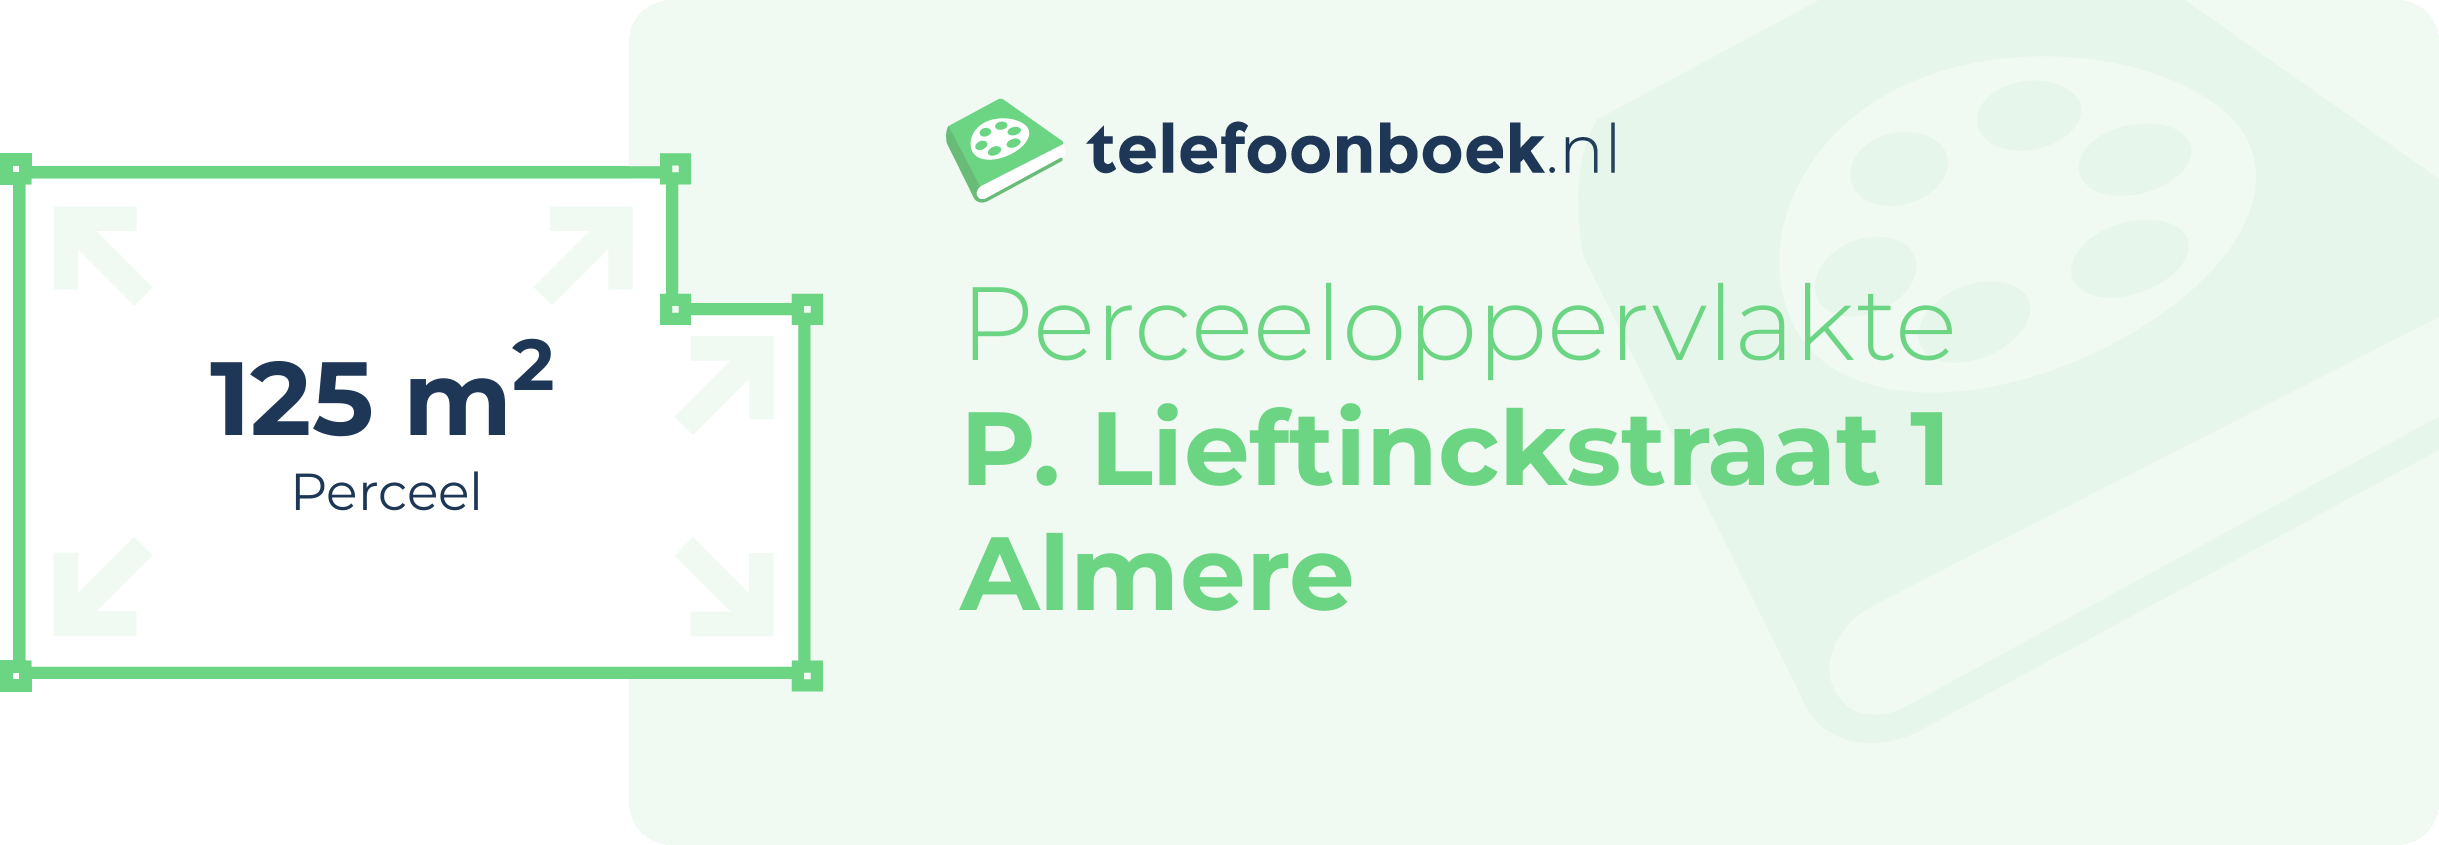 Perceeloppervlakte P. Lieftinckstraat 1 Almere